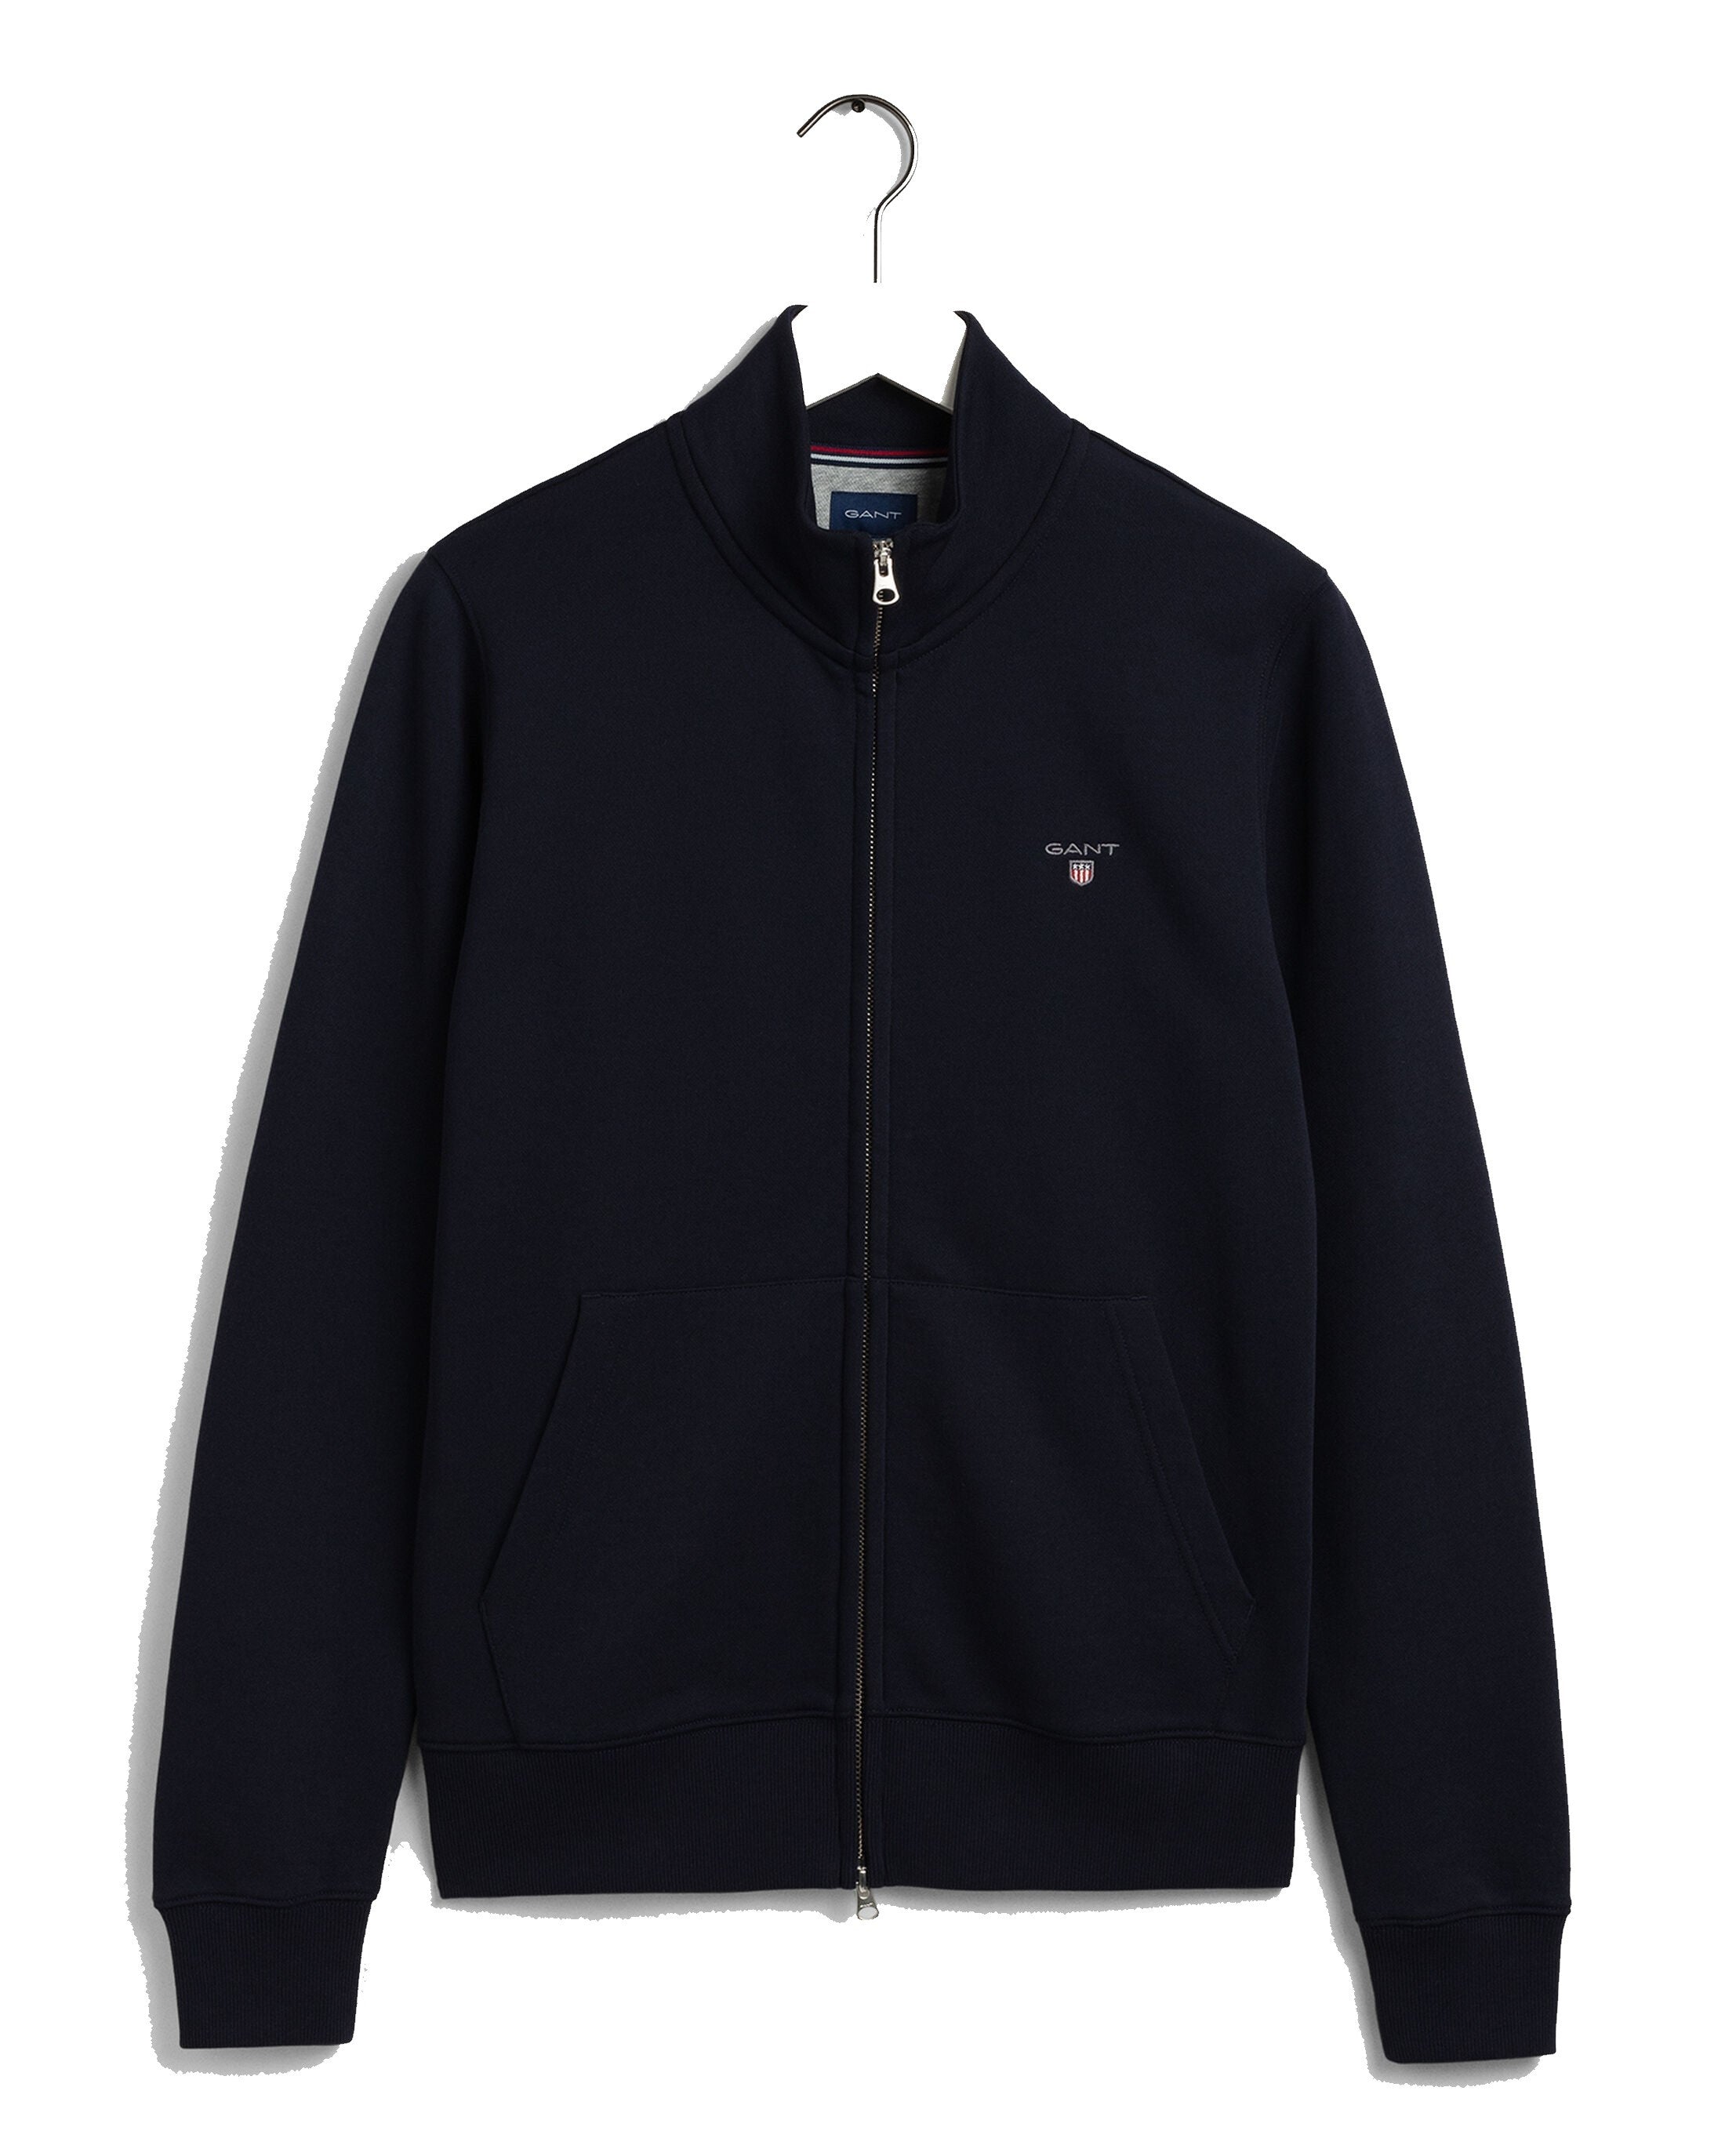 Gant Zip Through Navy Sweatshirt Cardigan